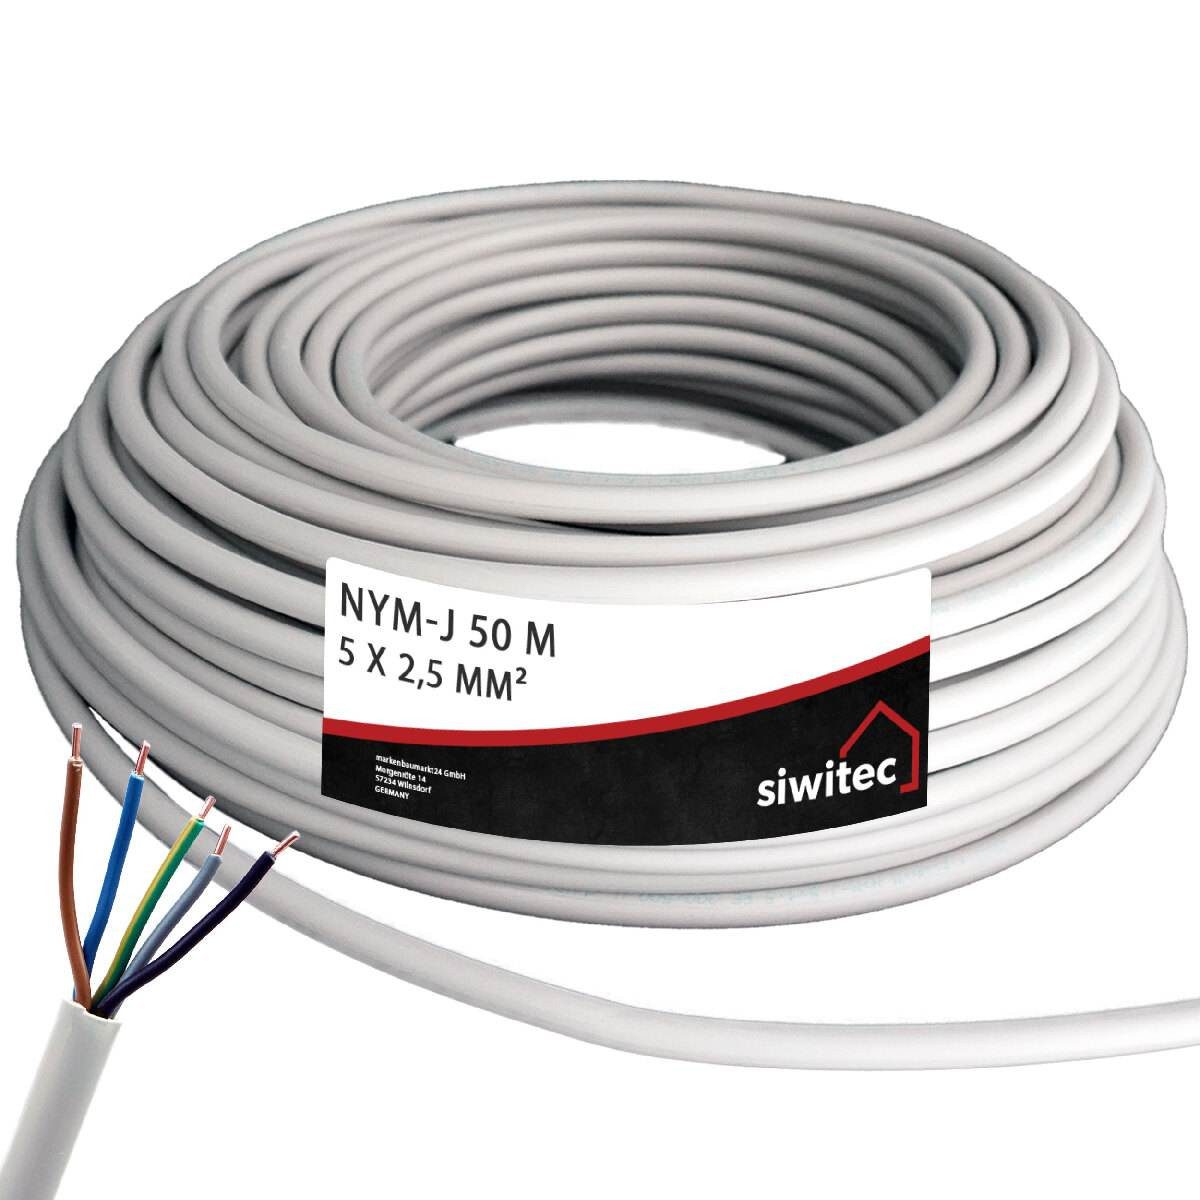 siwitec NYM-Kabel, 3x1,5, 3x2,5, 5x1,5, 5x2,5, 50m, 100m (2x50m Ring) Stromkabel, NYY-Kabel, (5000 cm), Universell einsetzbar, 5-adrig, Polyvinylchlorid, Made in Germany